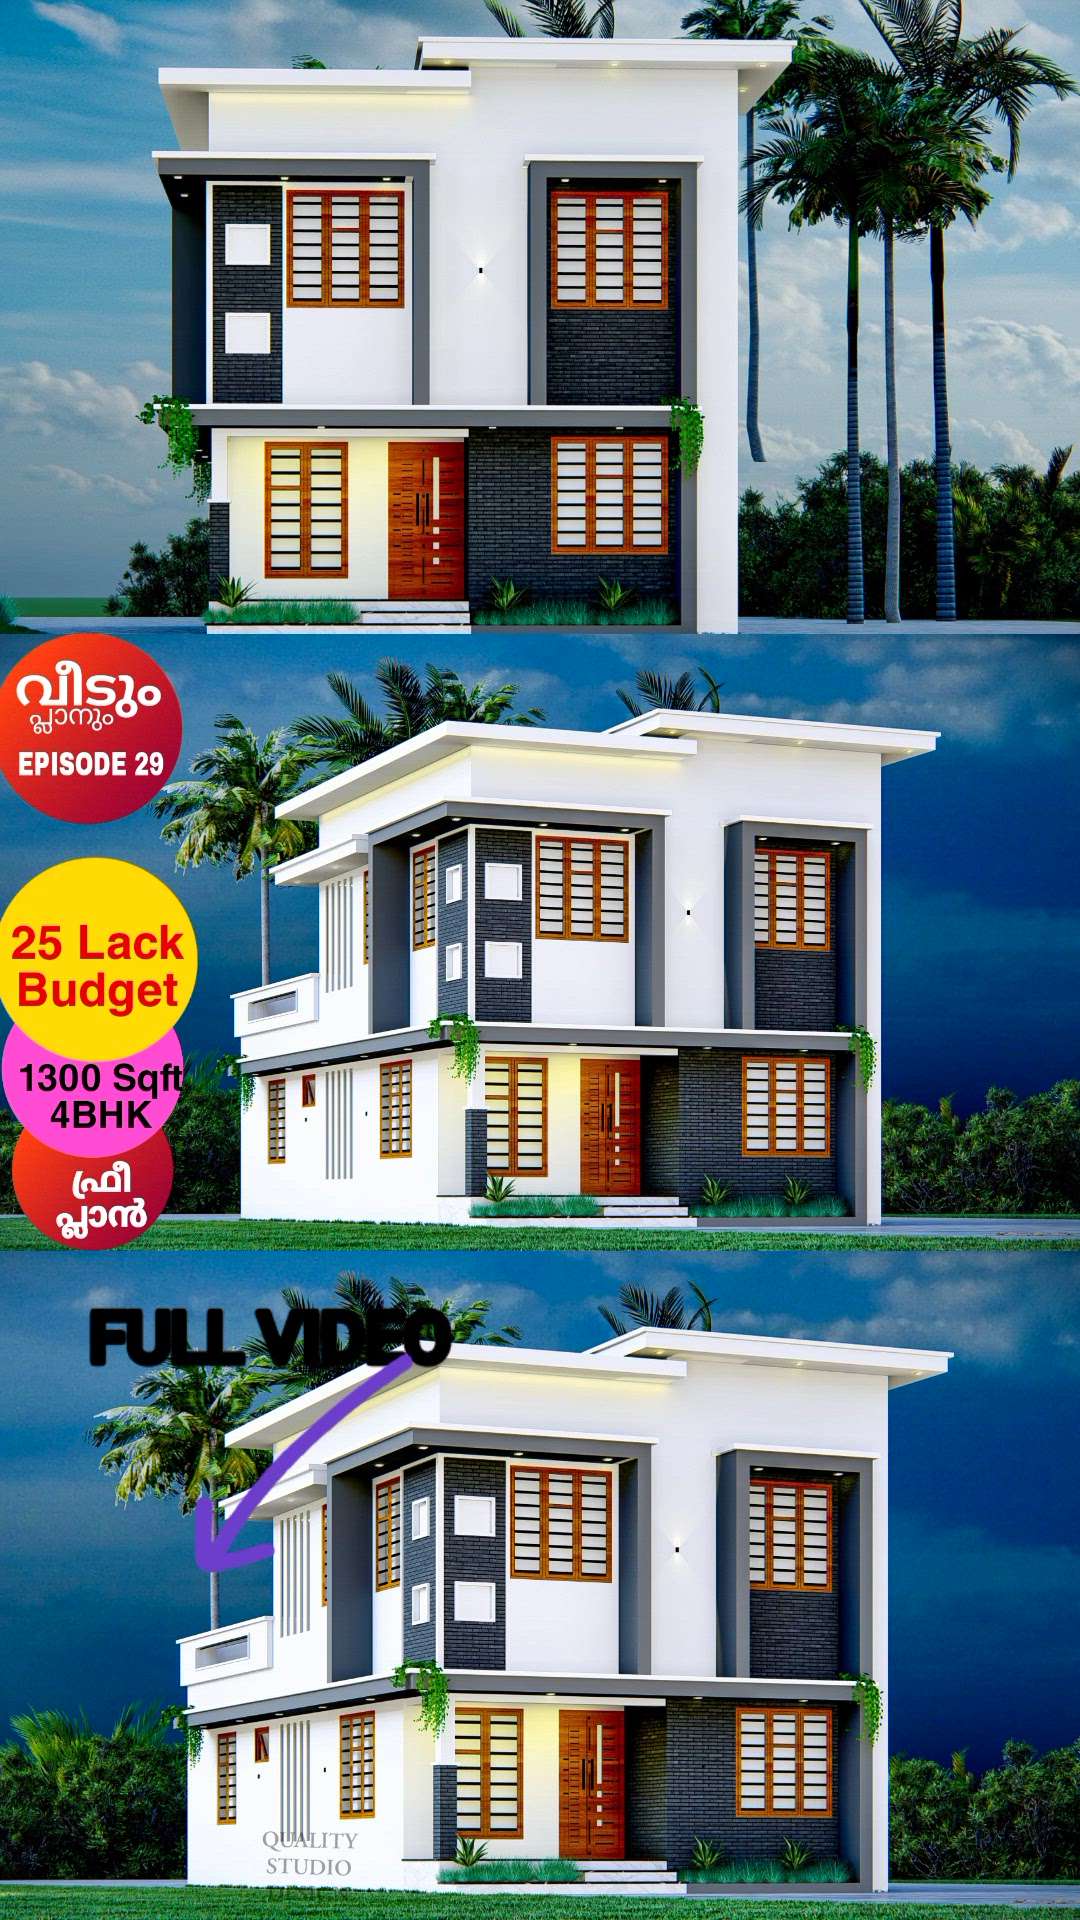 3d 2side with night view design ഏറ്റവും കുറഞ്ഞ നിരക്കിൽ സ്വന്തമാക്കൂ more details msg 7591926371 #1000SqftHouse #900sqft #3d #FlooringExperts #ElevationHome #KeralaStyleHouse #ContemporaryHouse #ContemporaryDesigns #FloorPlans #3Dfloorplans #1200sqftHouse #budget #budgethouses